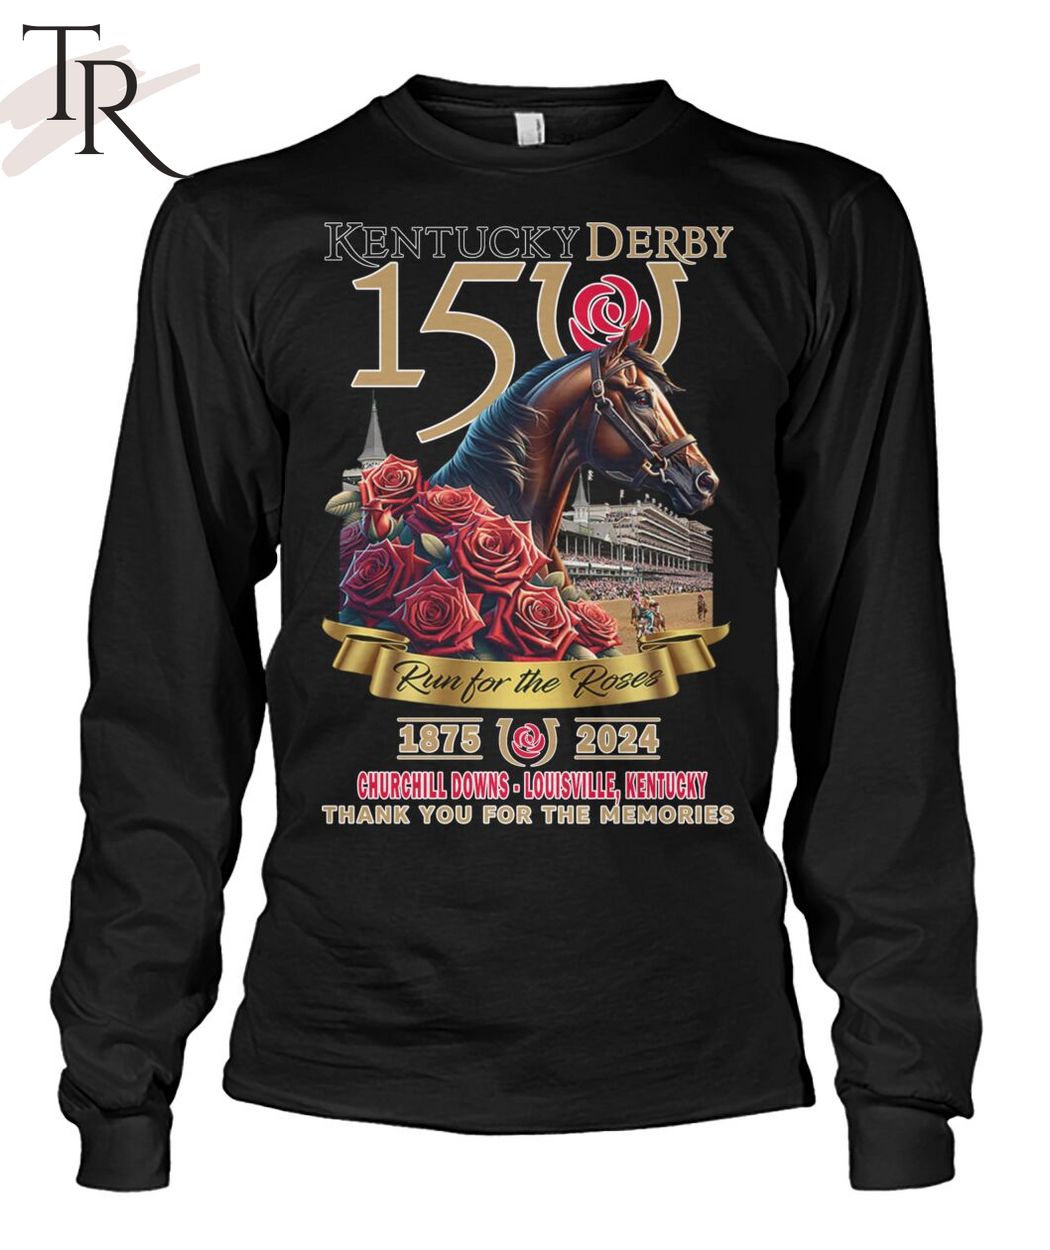 Kentucky Derby Run For The Roses 1875-2024 Churchill Downs - Louisville, Kentucky Thank You For The Memories T-Shirt